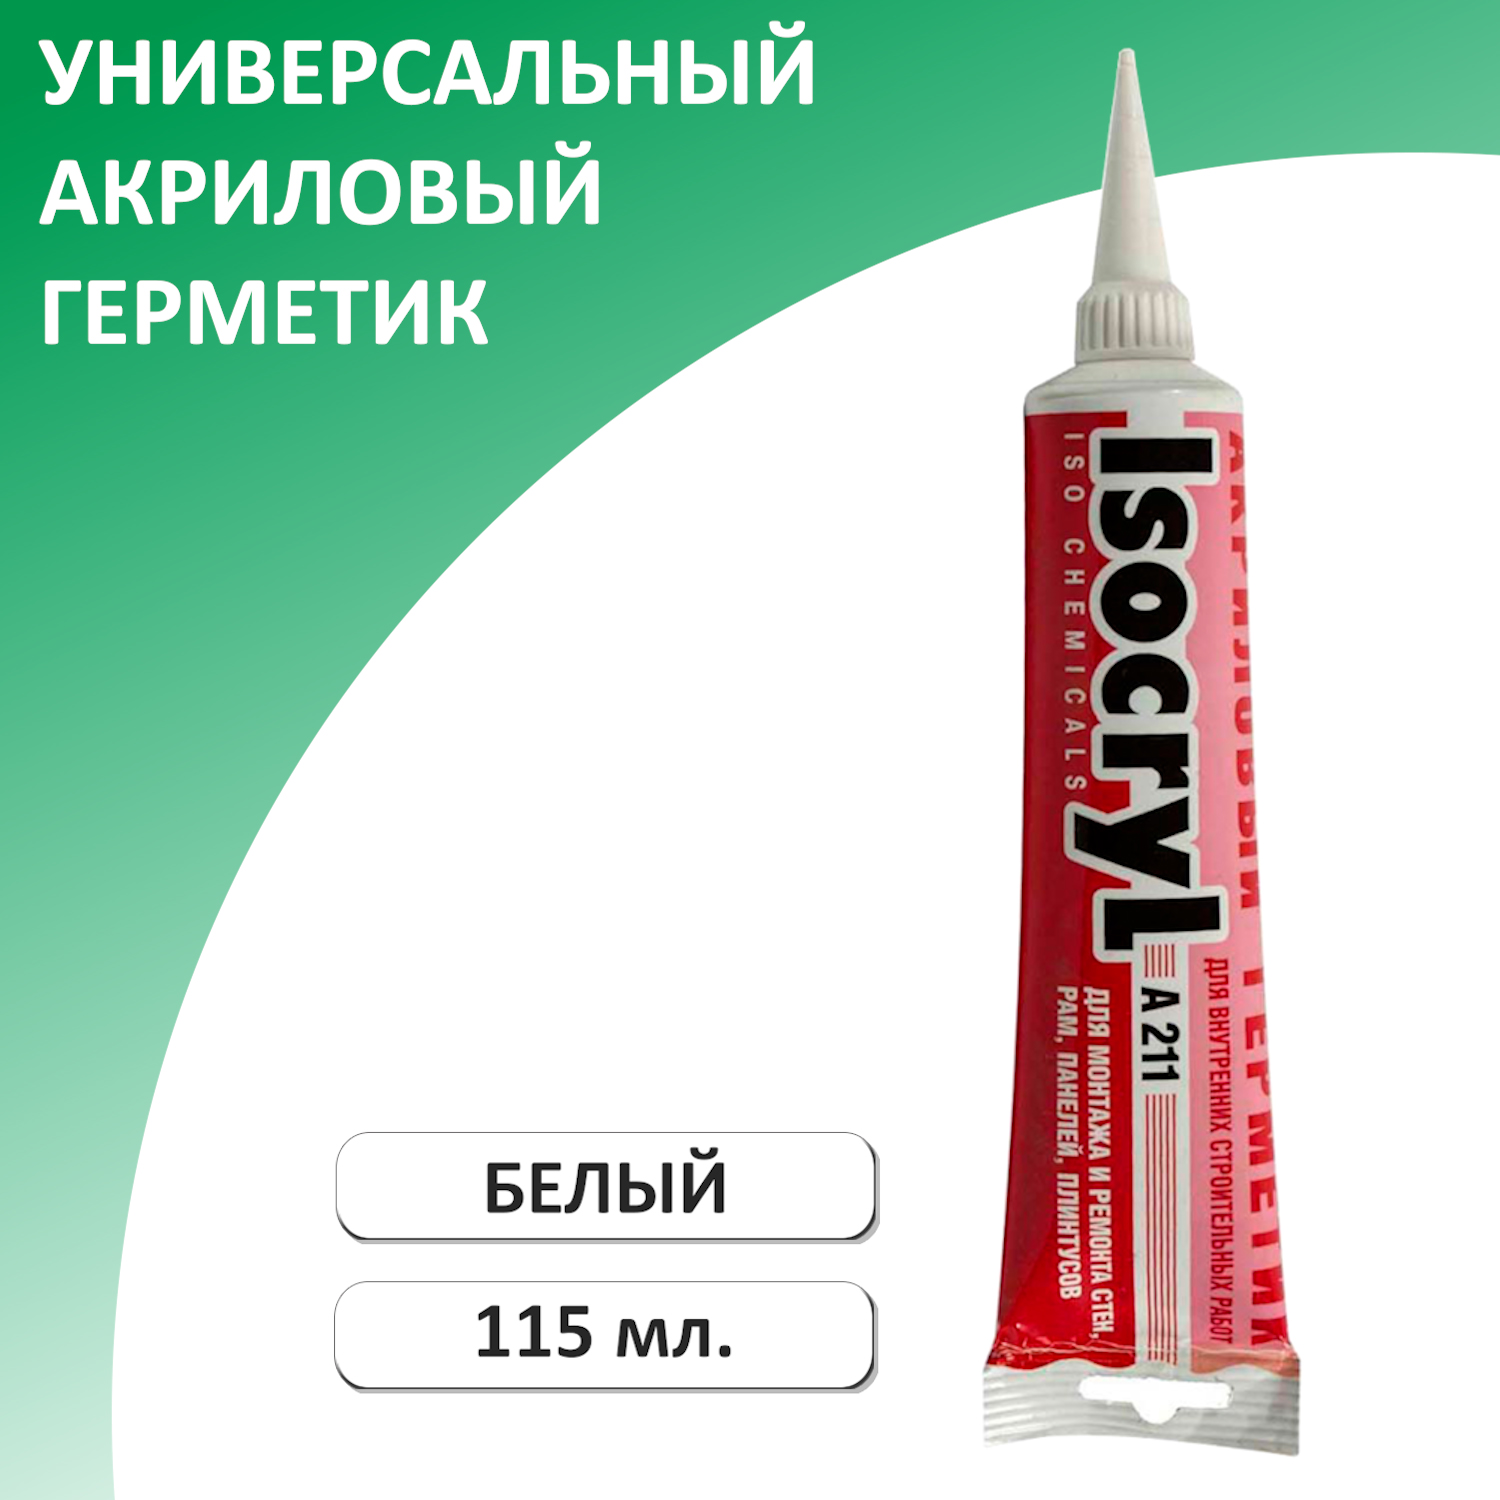 Герметик акриловый ISOCRYL A211, белый, 115 мл акриловый герметик isocryl